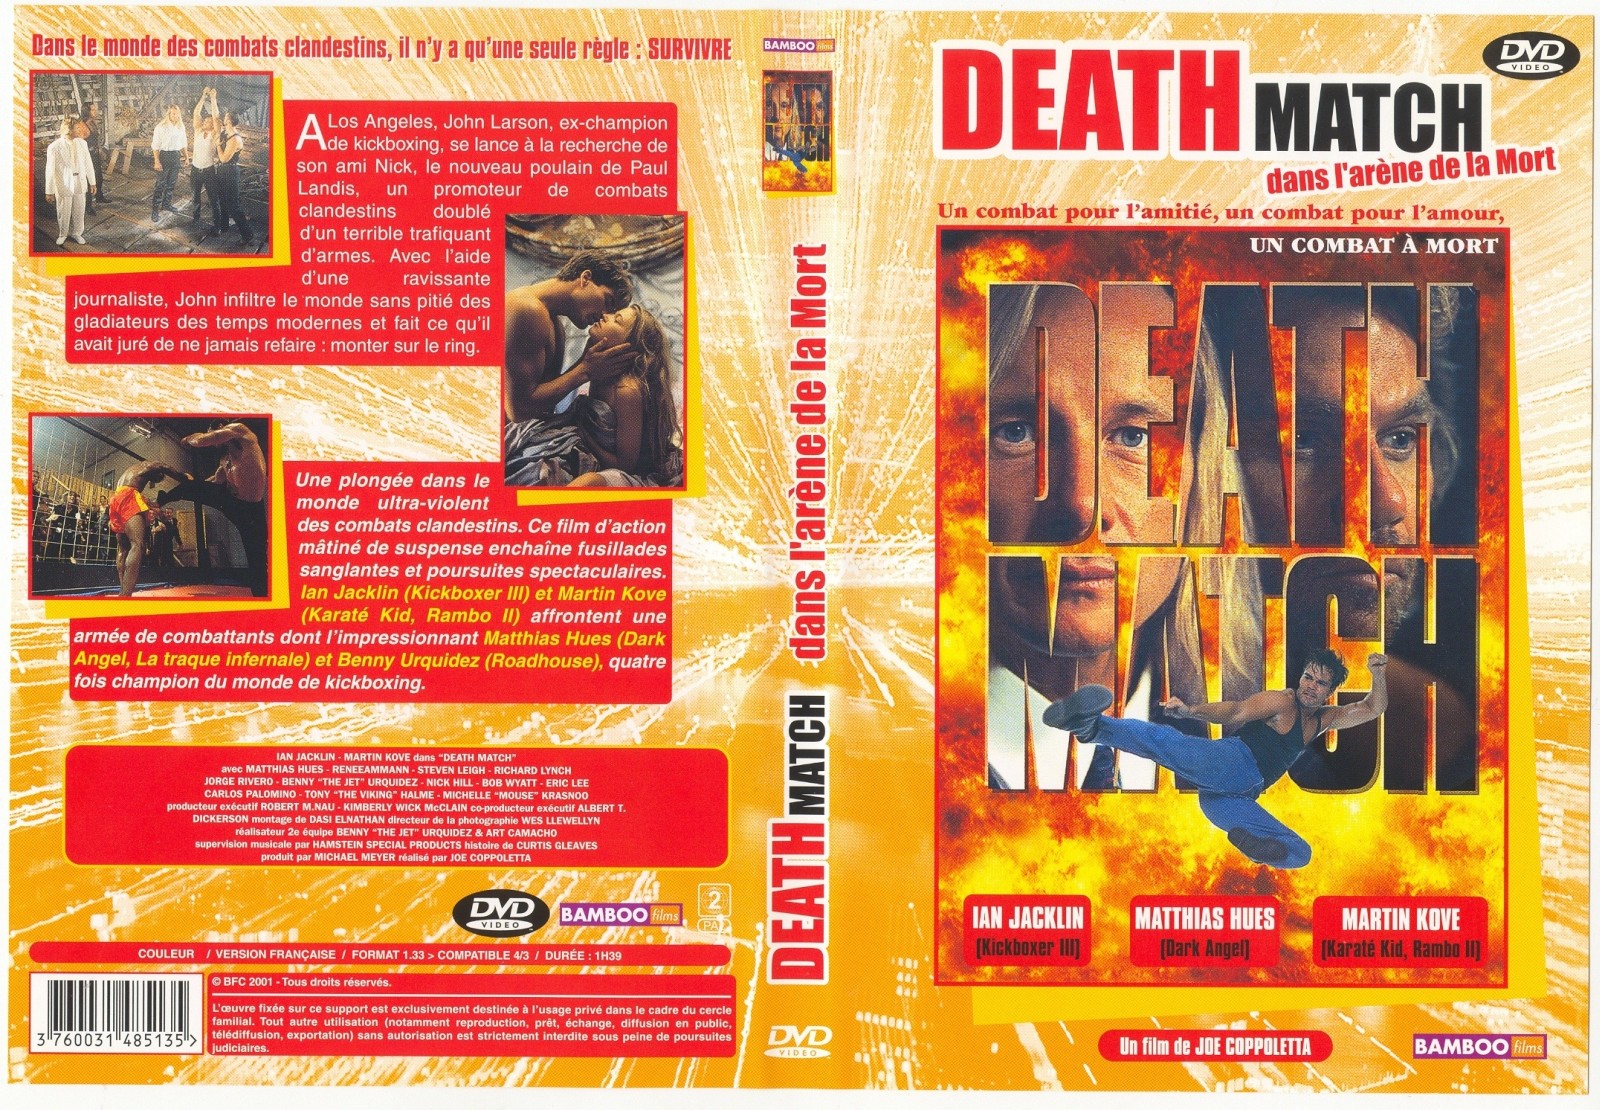 Jaquette DVD Death match